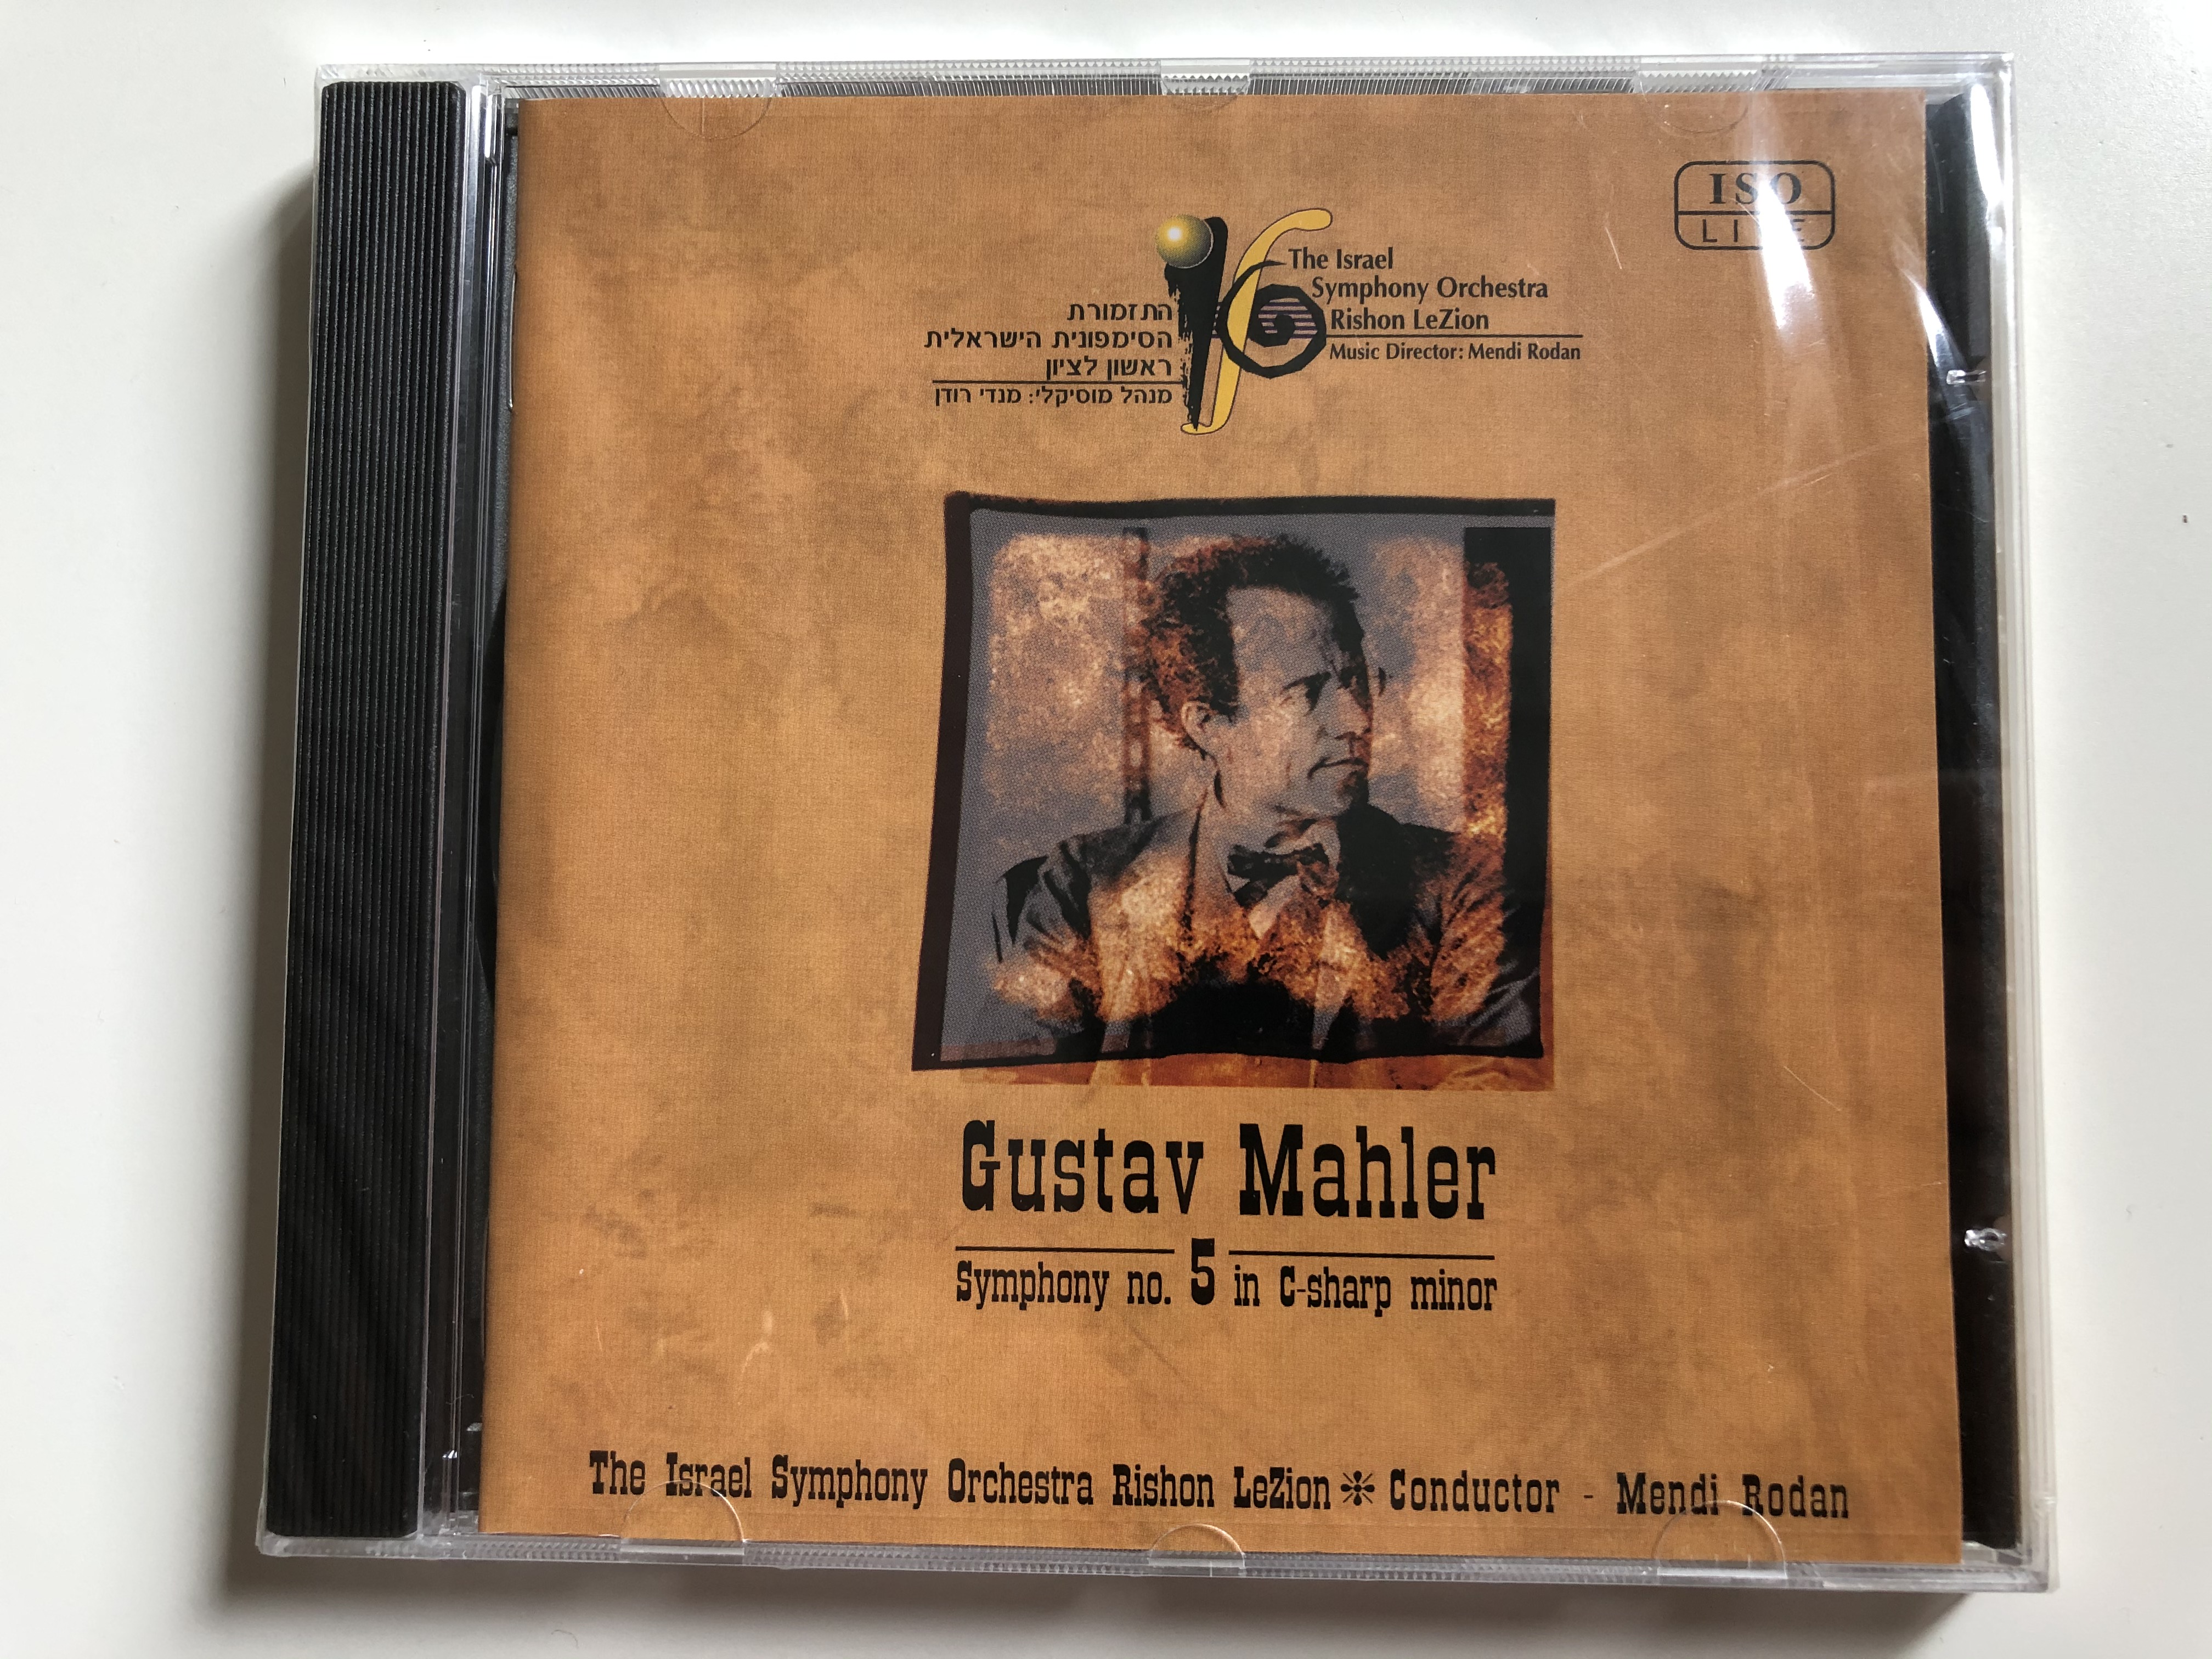 gustav-mahler-symphony-no.-5-in-c-sharp-minor-the-israel-symphony-orchestra-rishon-lezion-conductor-mendi-rodan-iso-live-audio-cd-2000-2000-3-1-.jpg